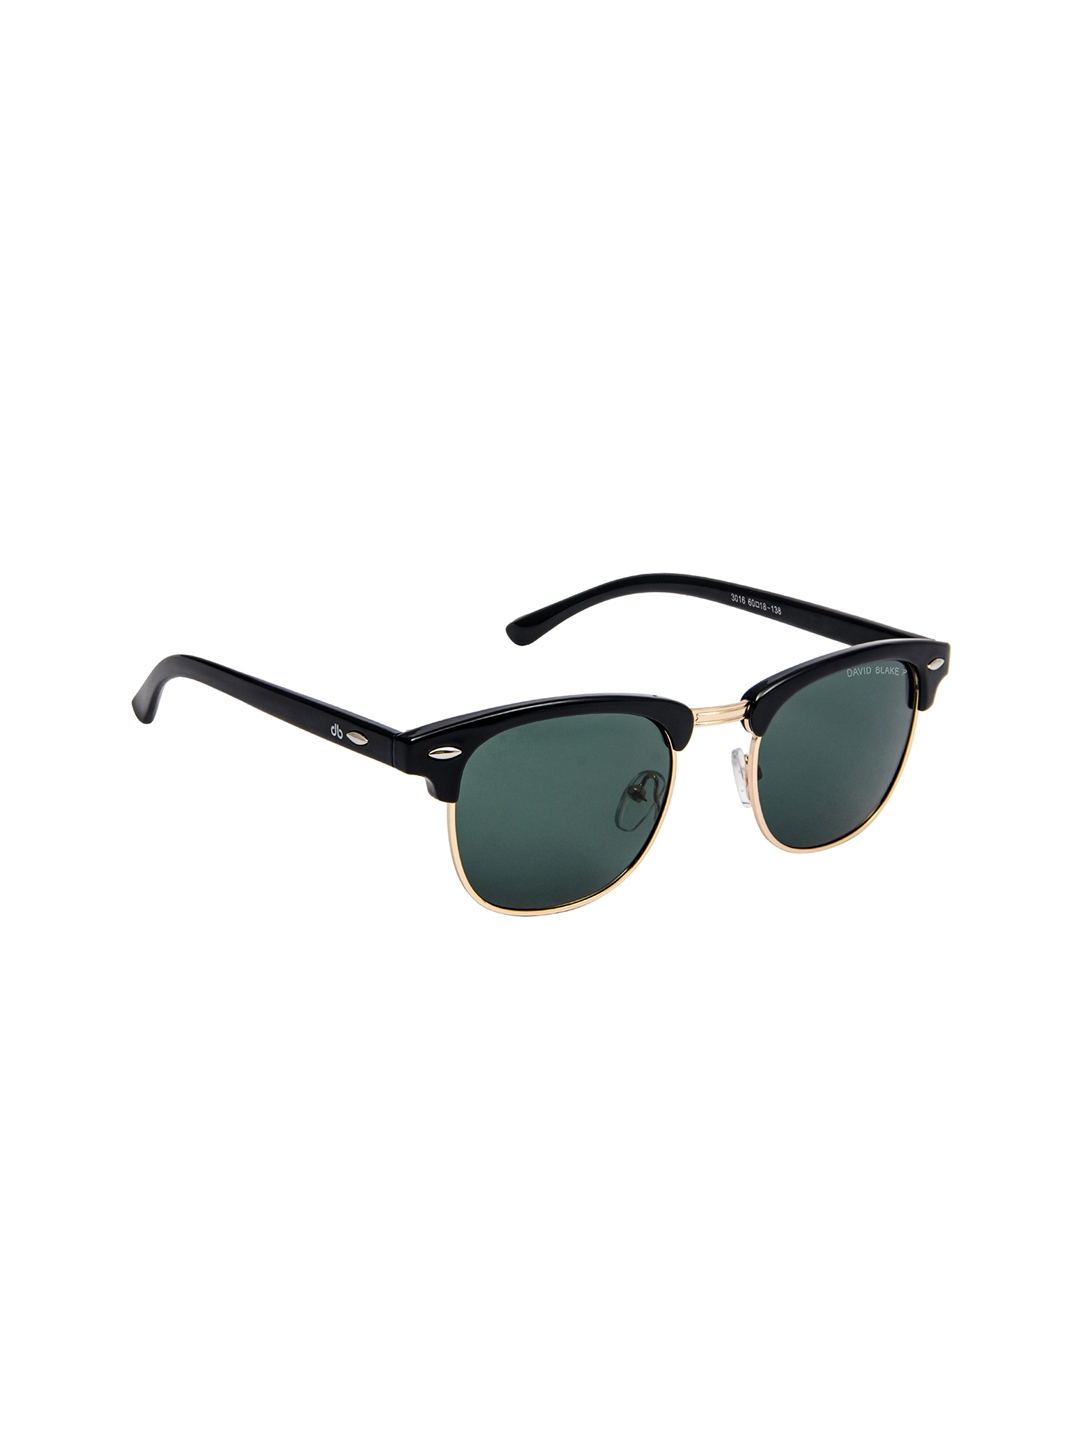 Buy David Blake Unisex Green & Black Wayfarer Sunglasses ...